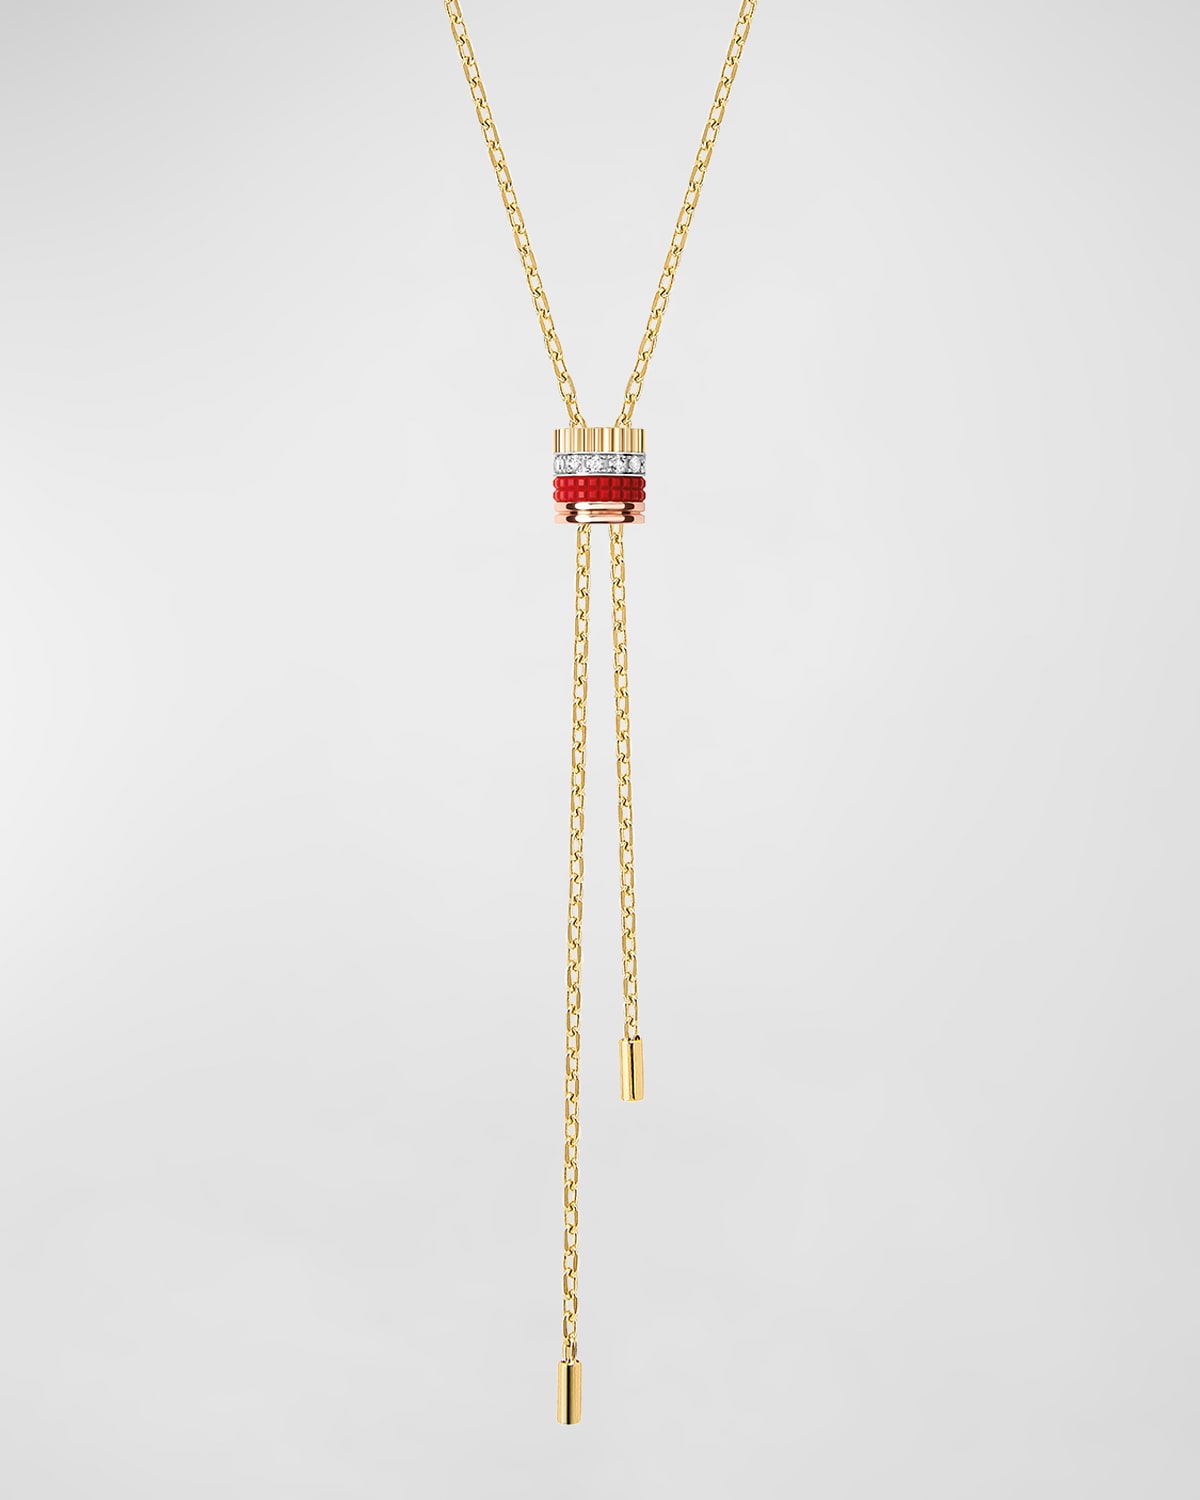 Boucheron Quatre Red Edition Mini Tie Necklace with Diamonds